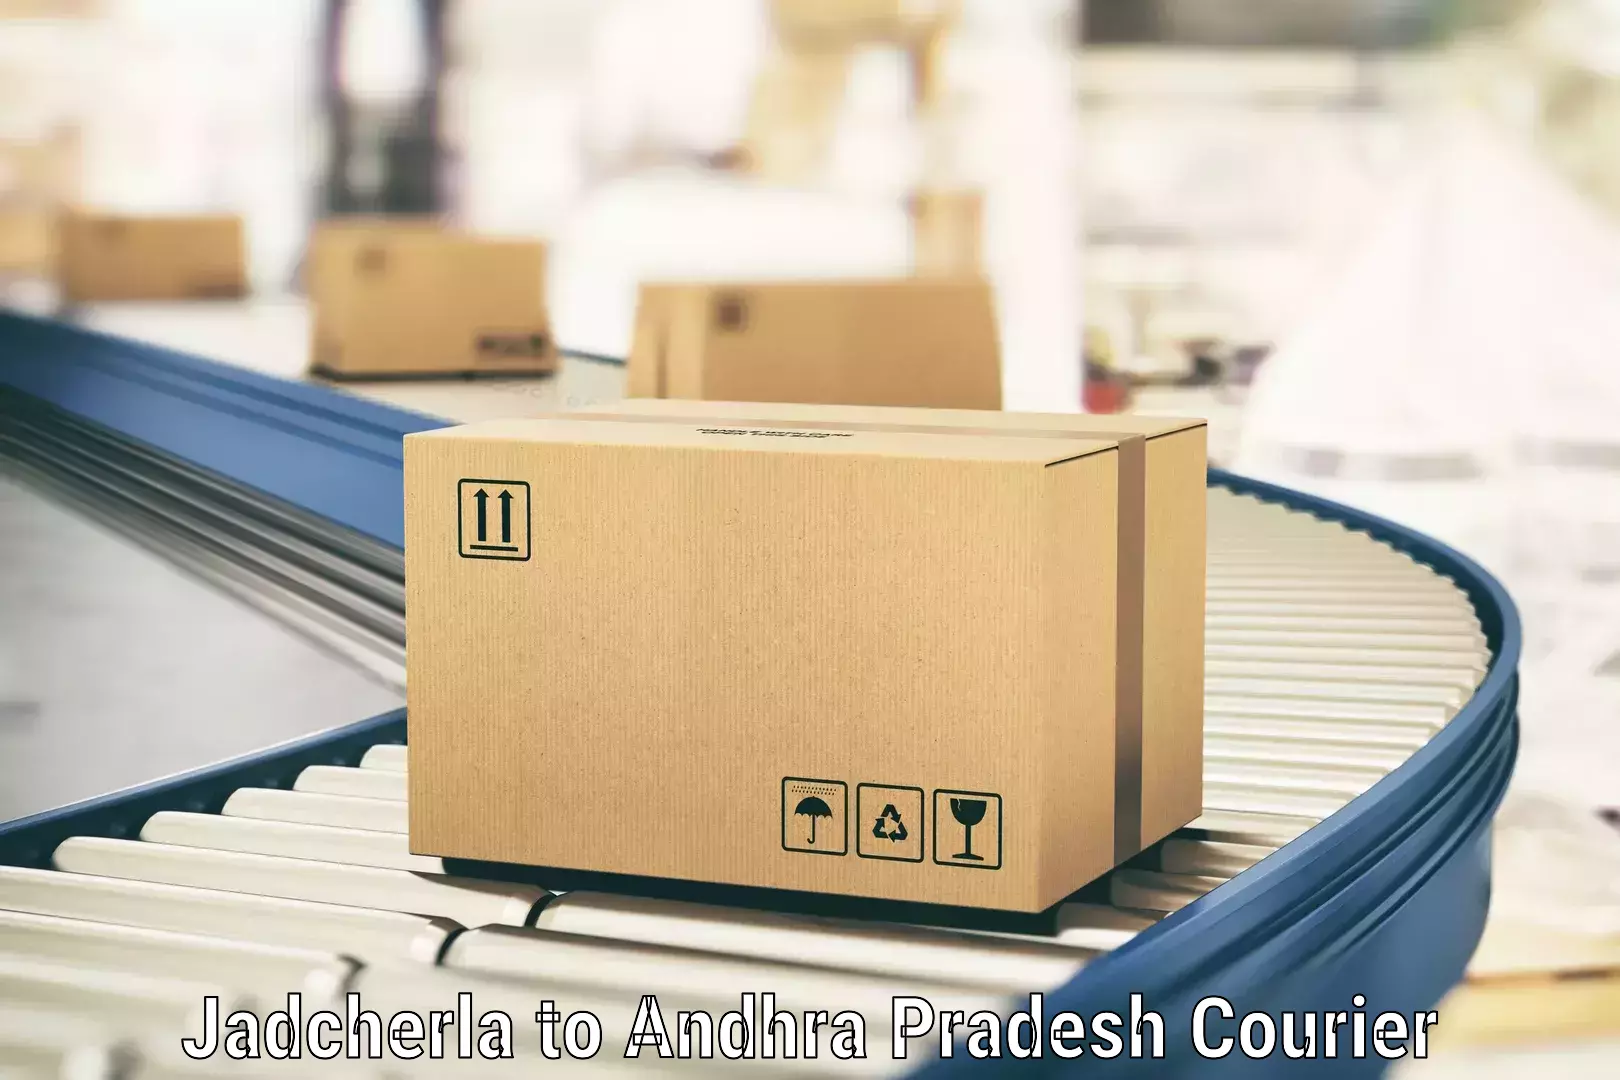 Express delivery capabilities Jadcherla to Andhra Pradesh